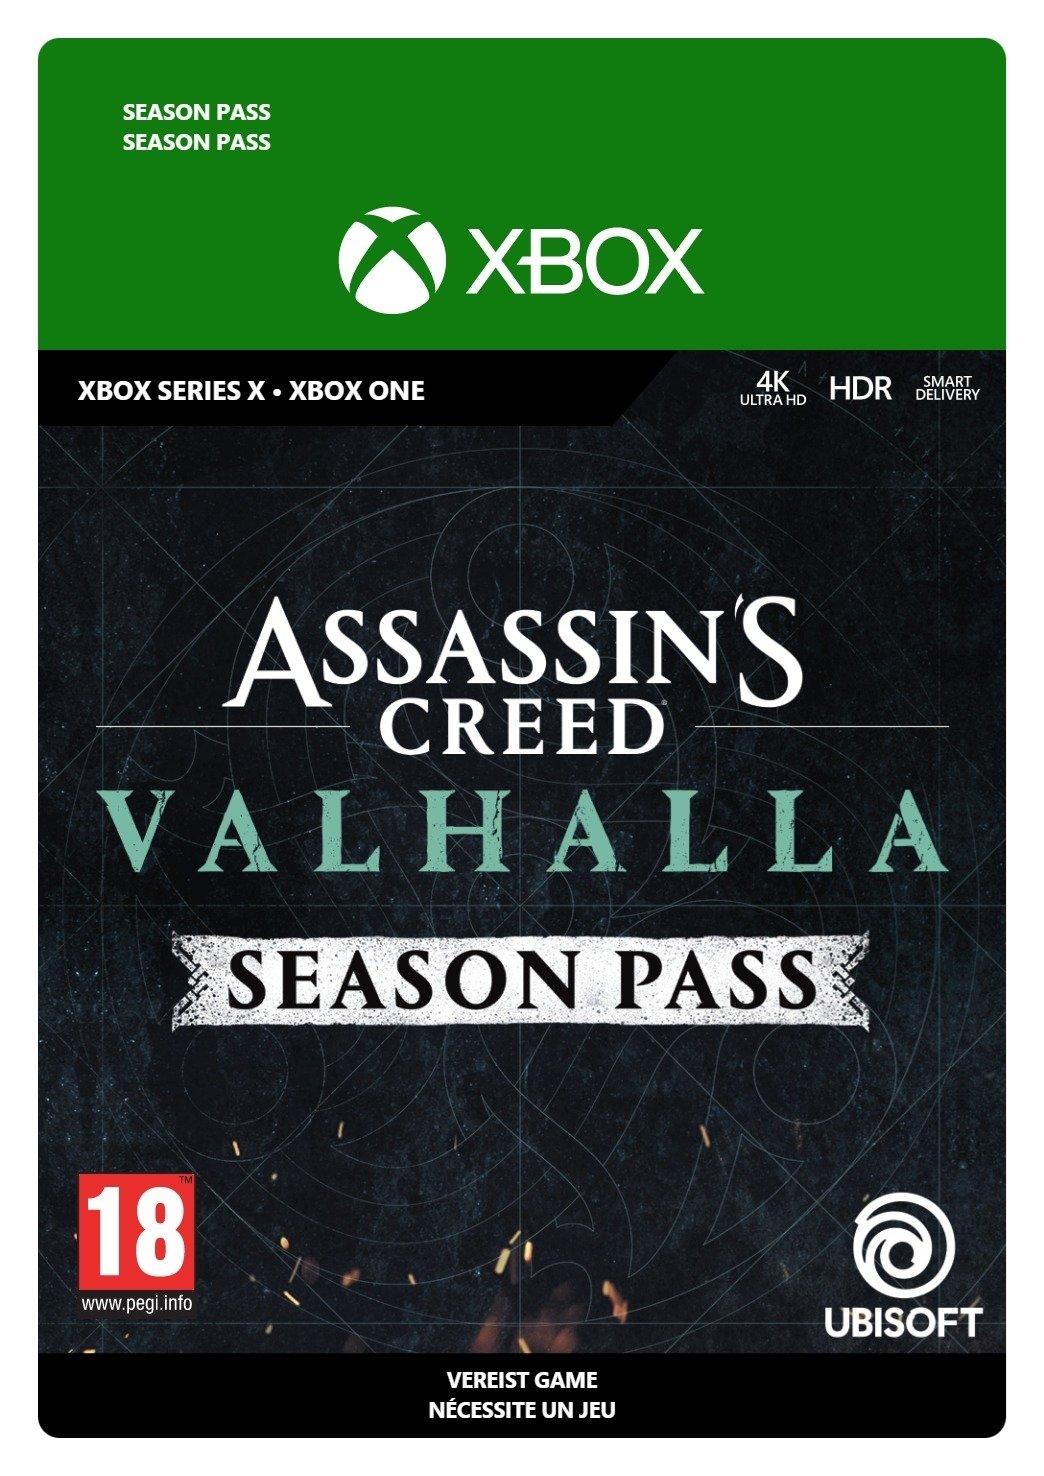 Assassin's Creed Valhalla Season Pass - Xbox Series X/Xbox One - Season Pass | 7D4-00562 (03e6d9e5-3819-cd44-b92e-c7c5d81fd36b)